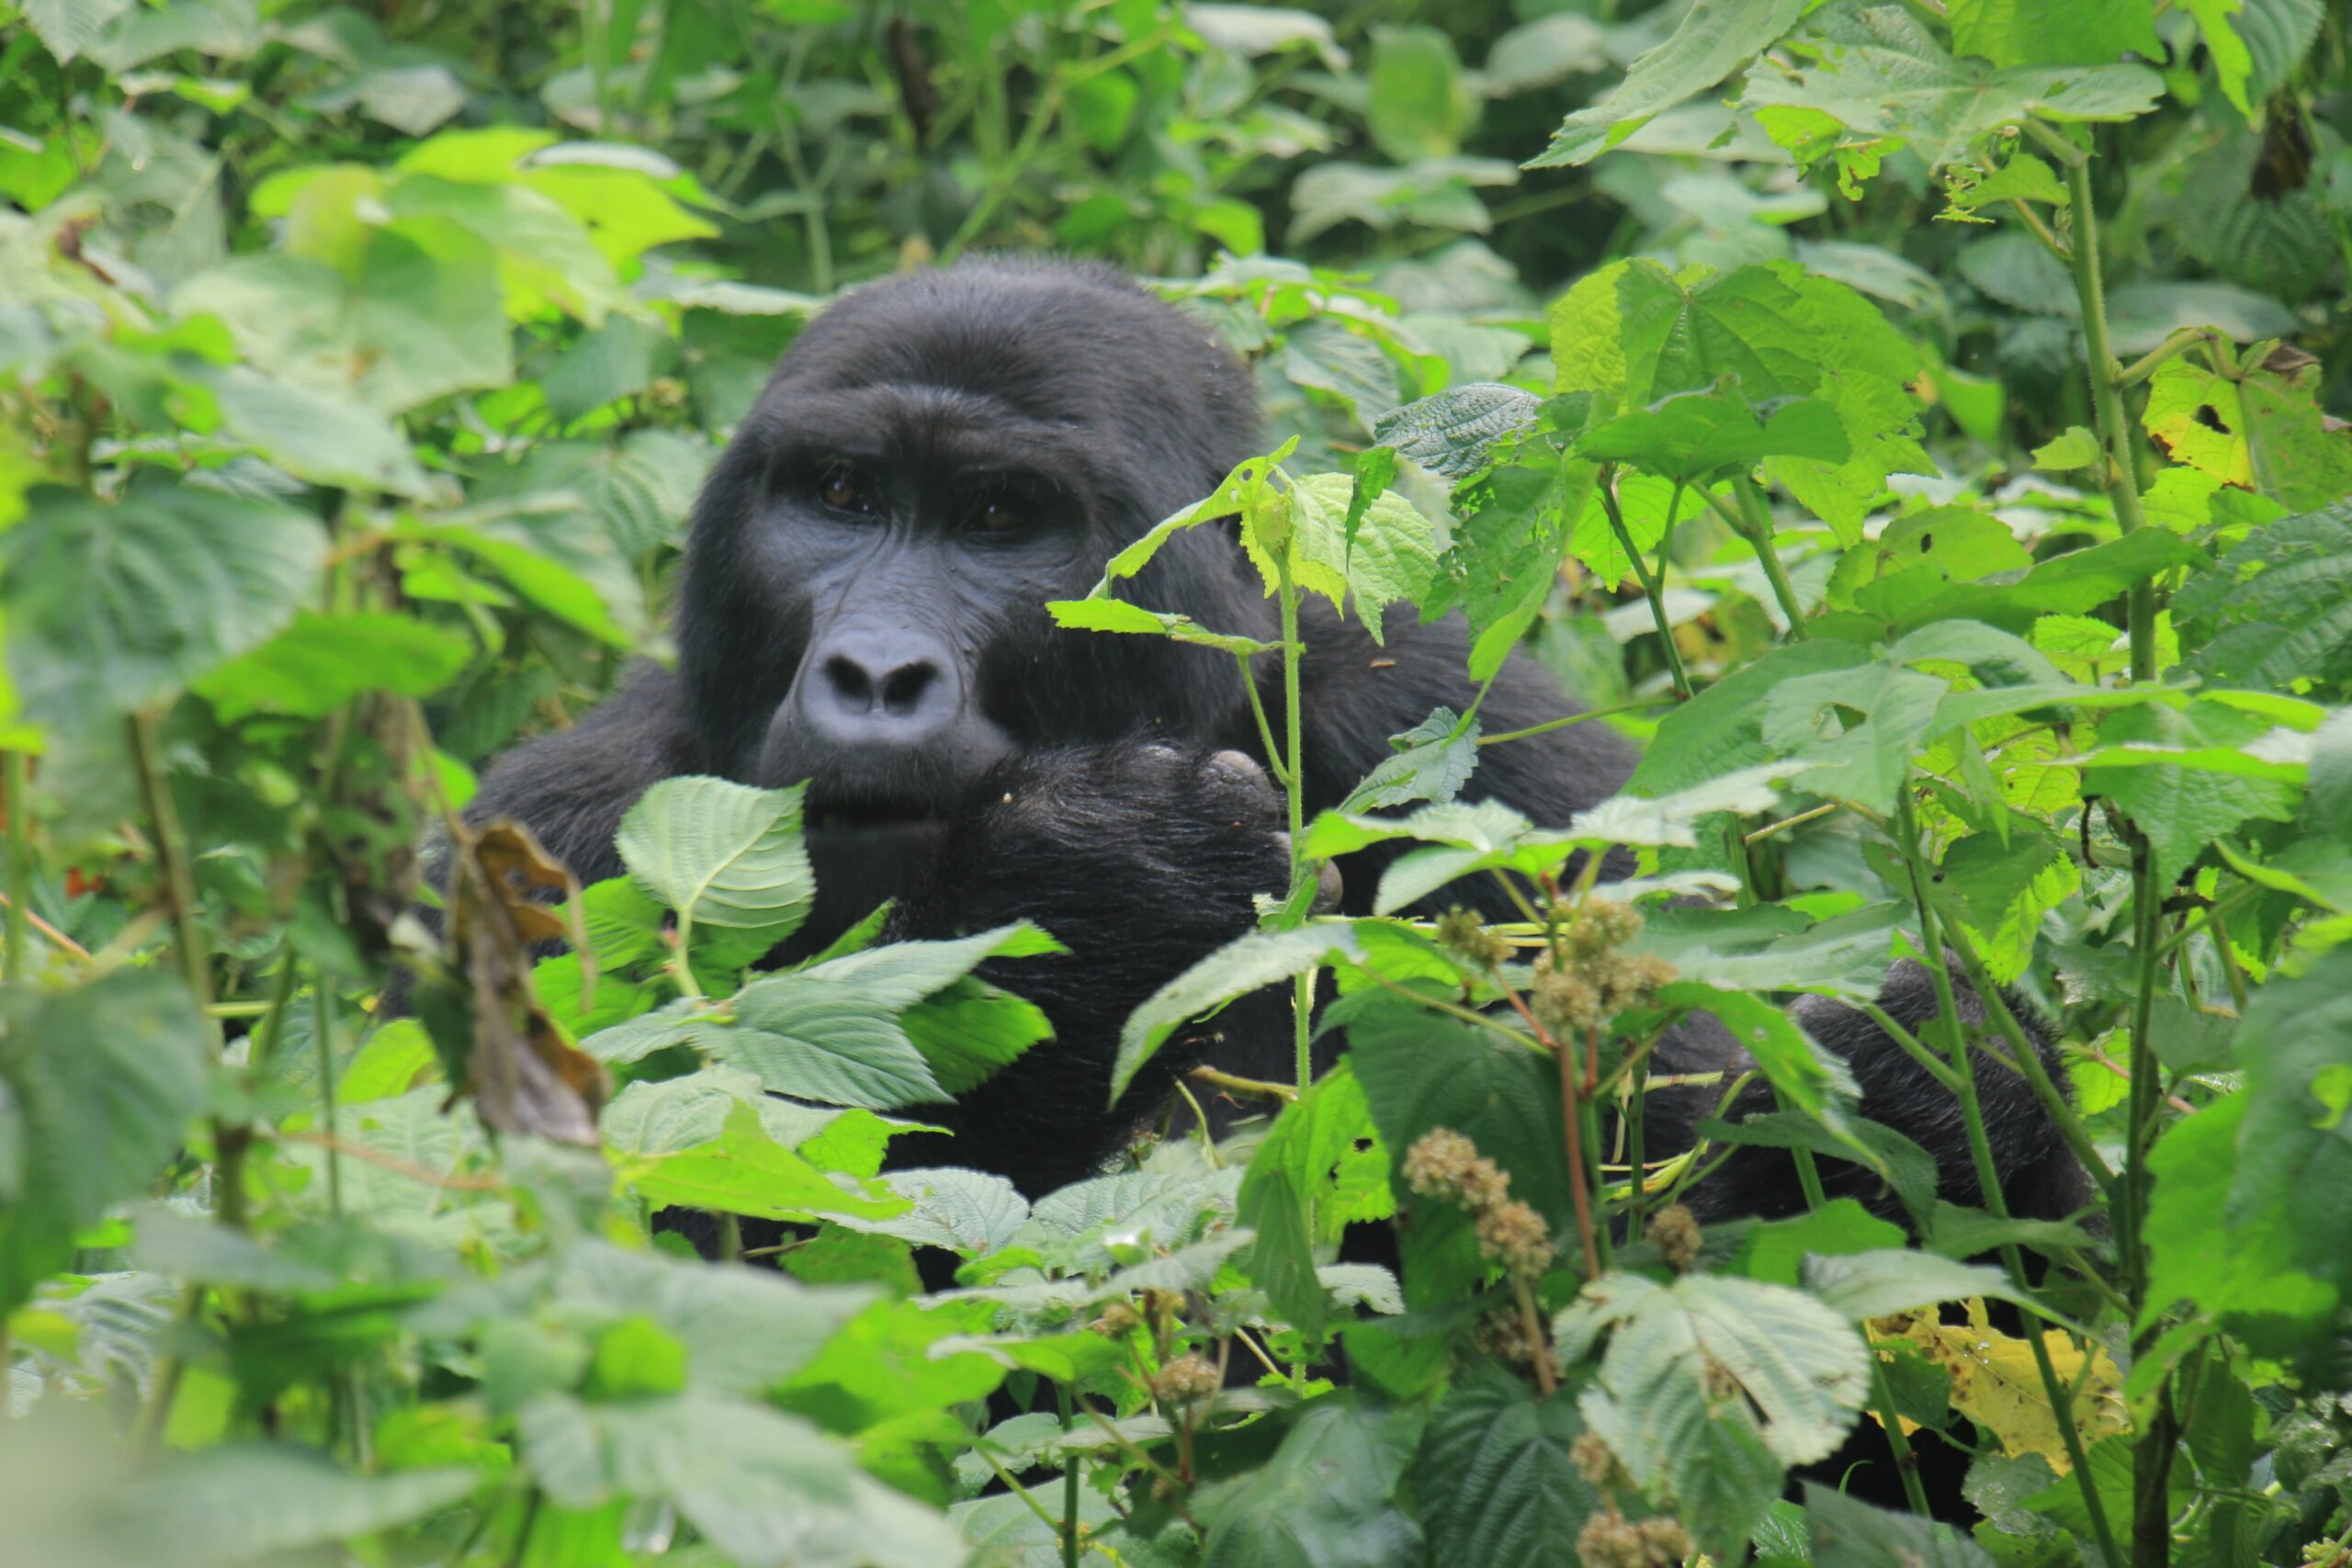 www.mukisasafarisuganda.com best tour agency company safaris gorilla tracking bwindi wild game viewing adventure photos min scaled